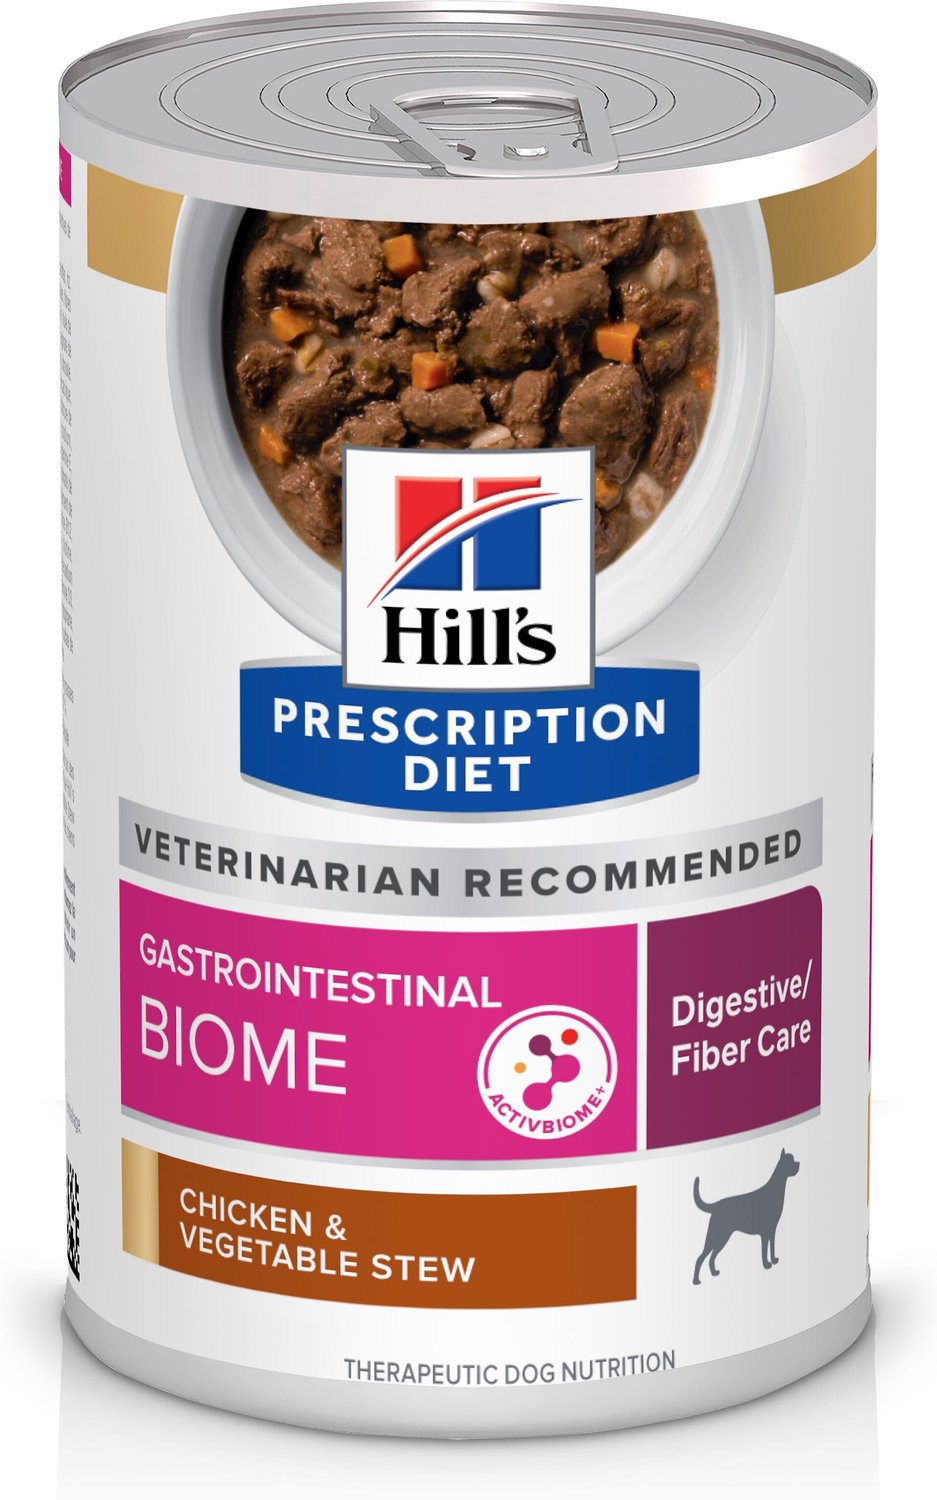 gastrointestinal biome dog food